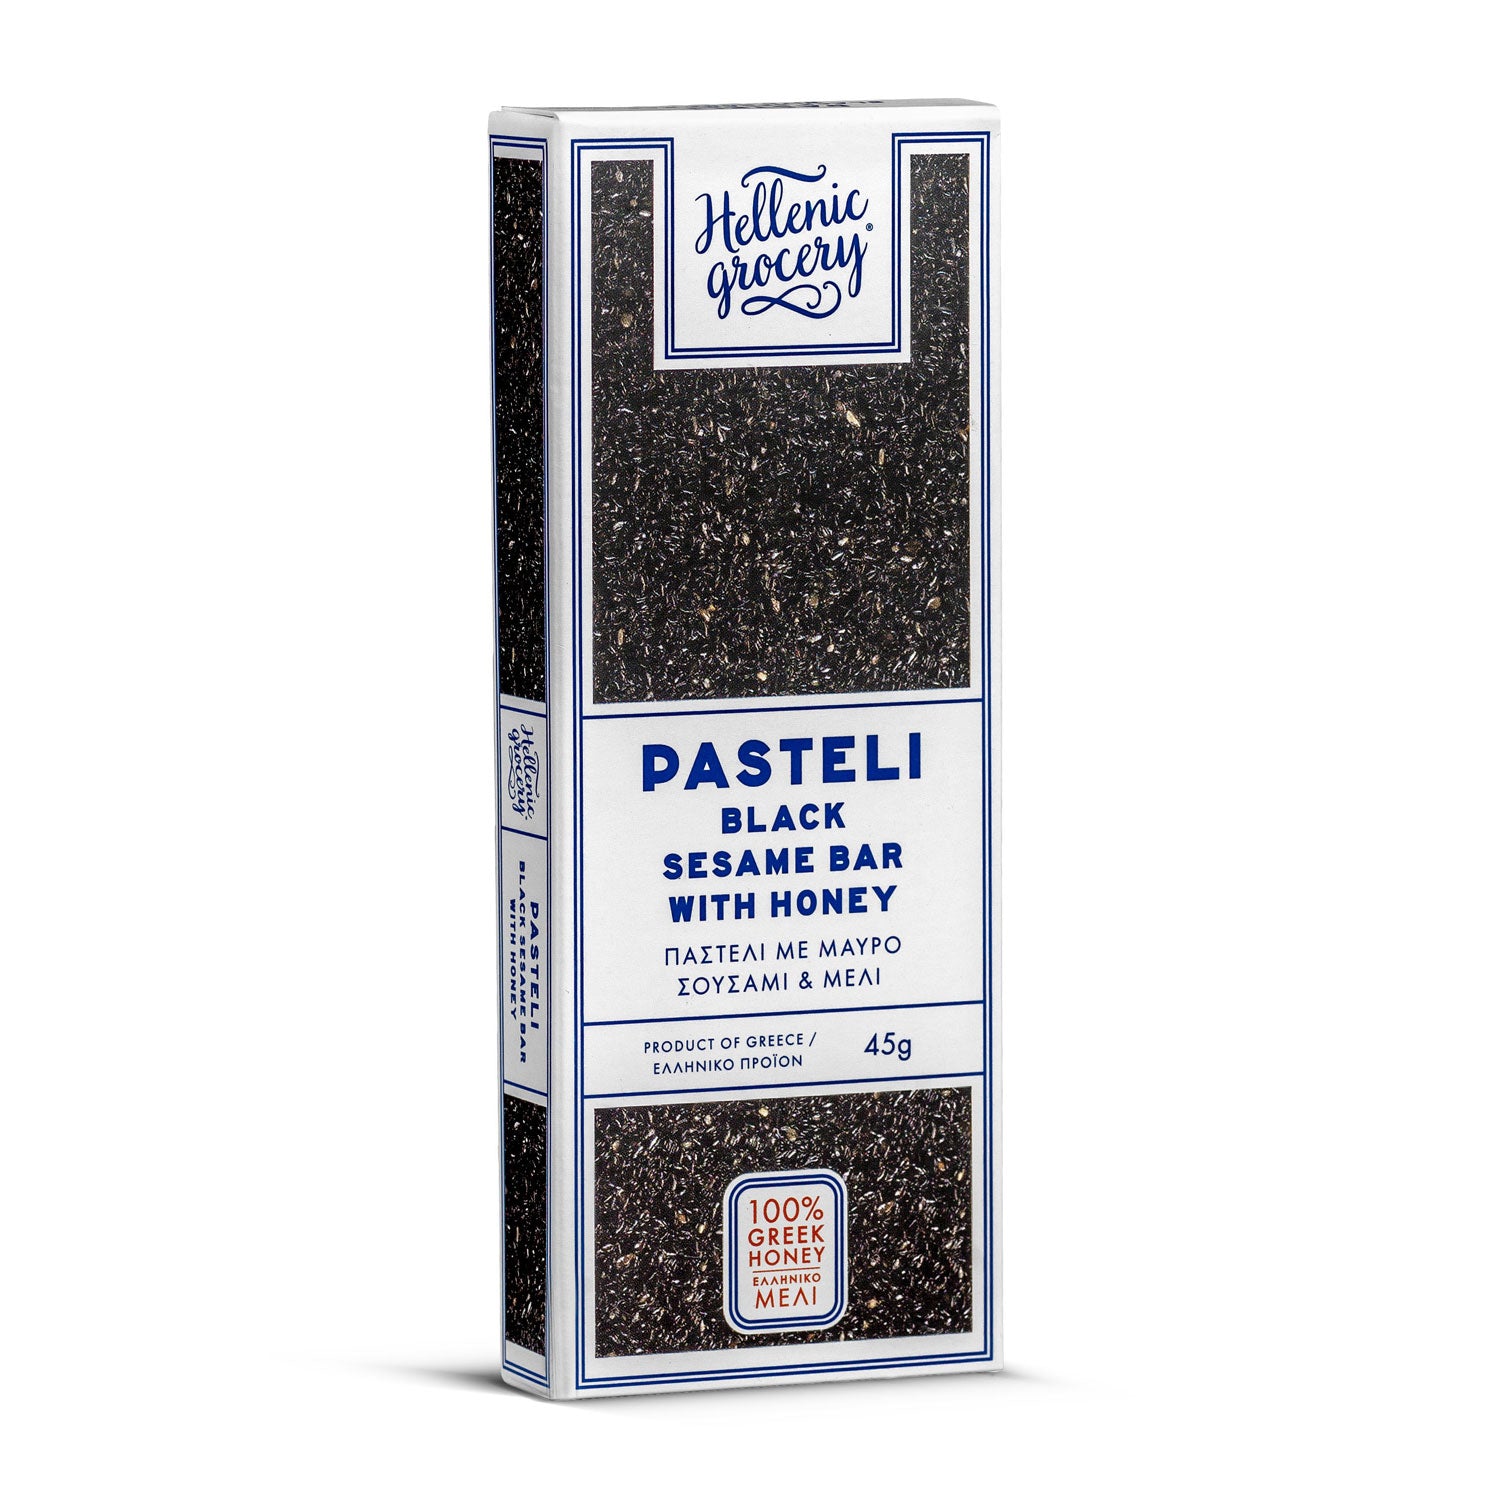 Pasteli of Black Sesame and Honey - 45g - Hellenic Grocery